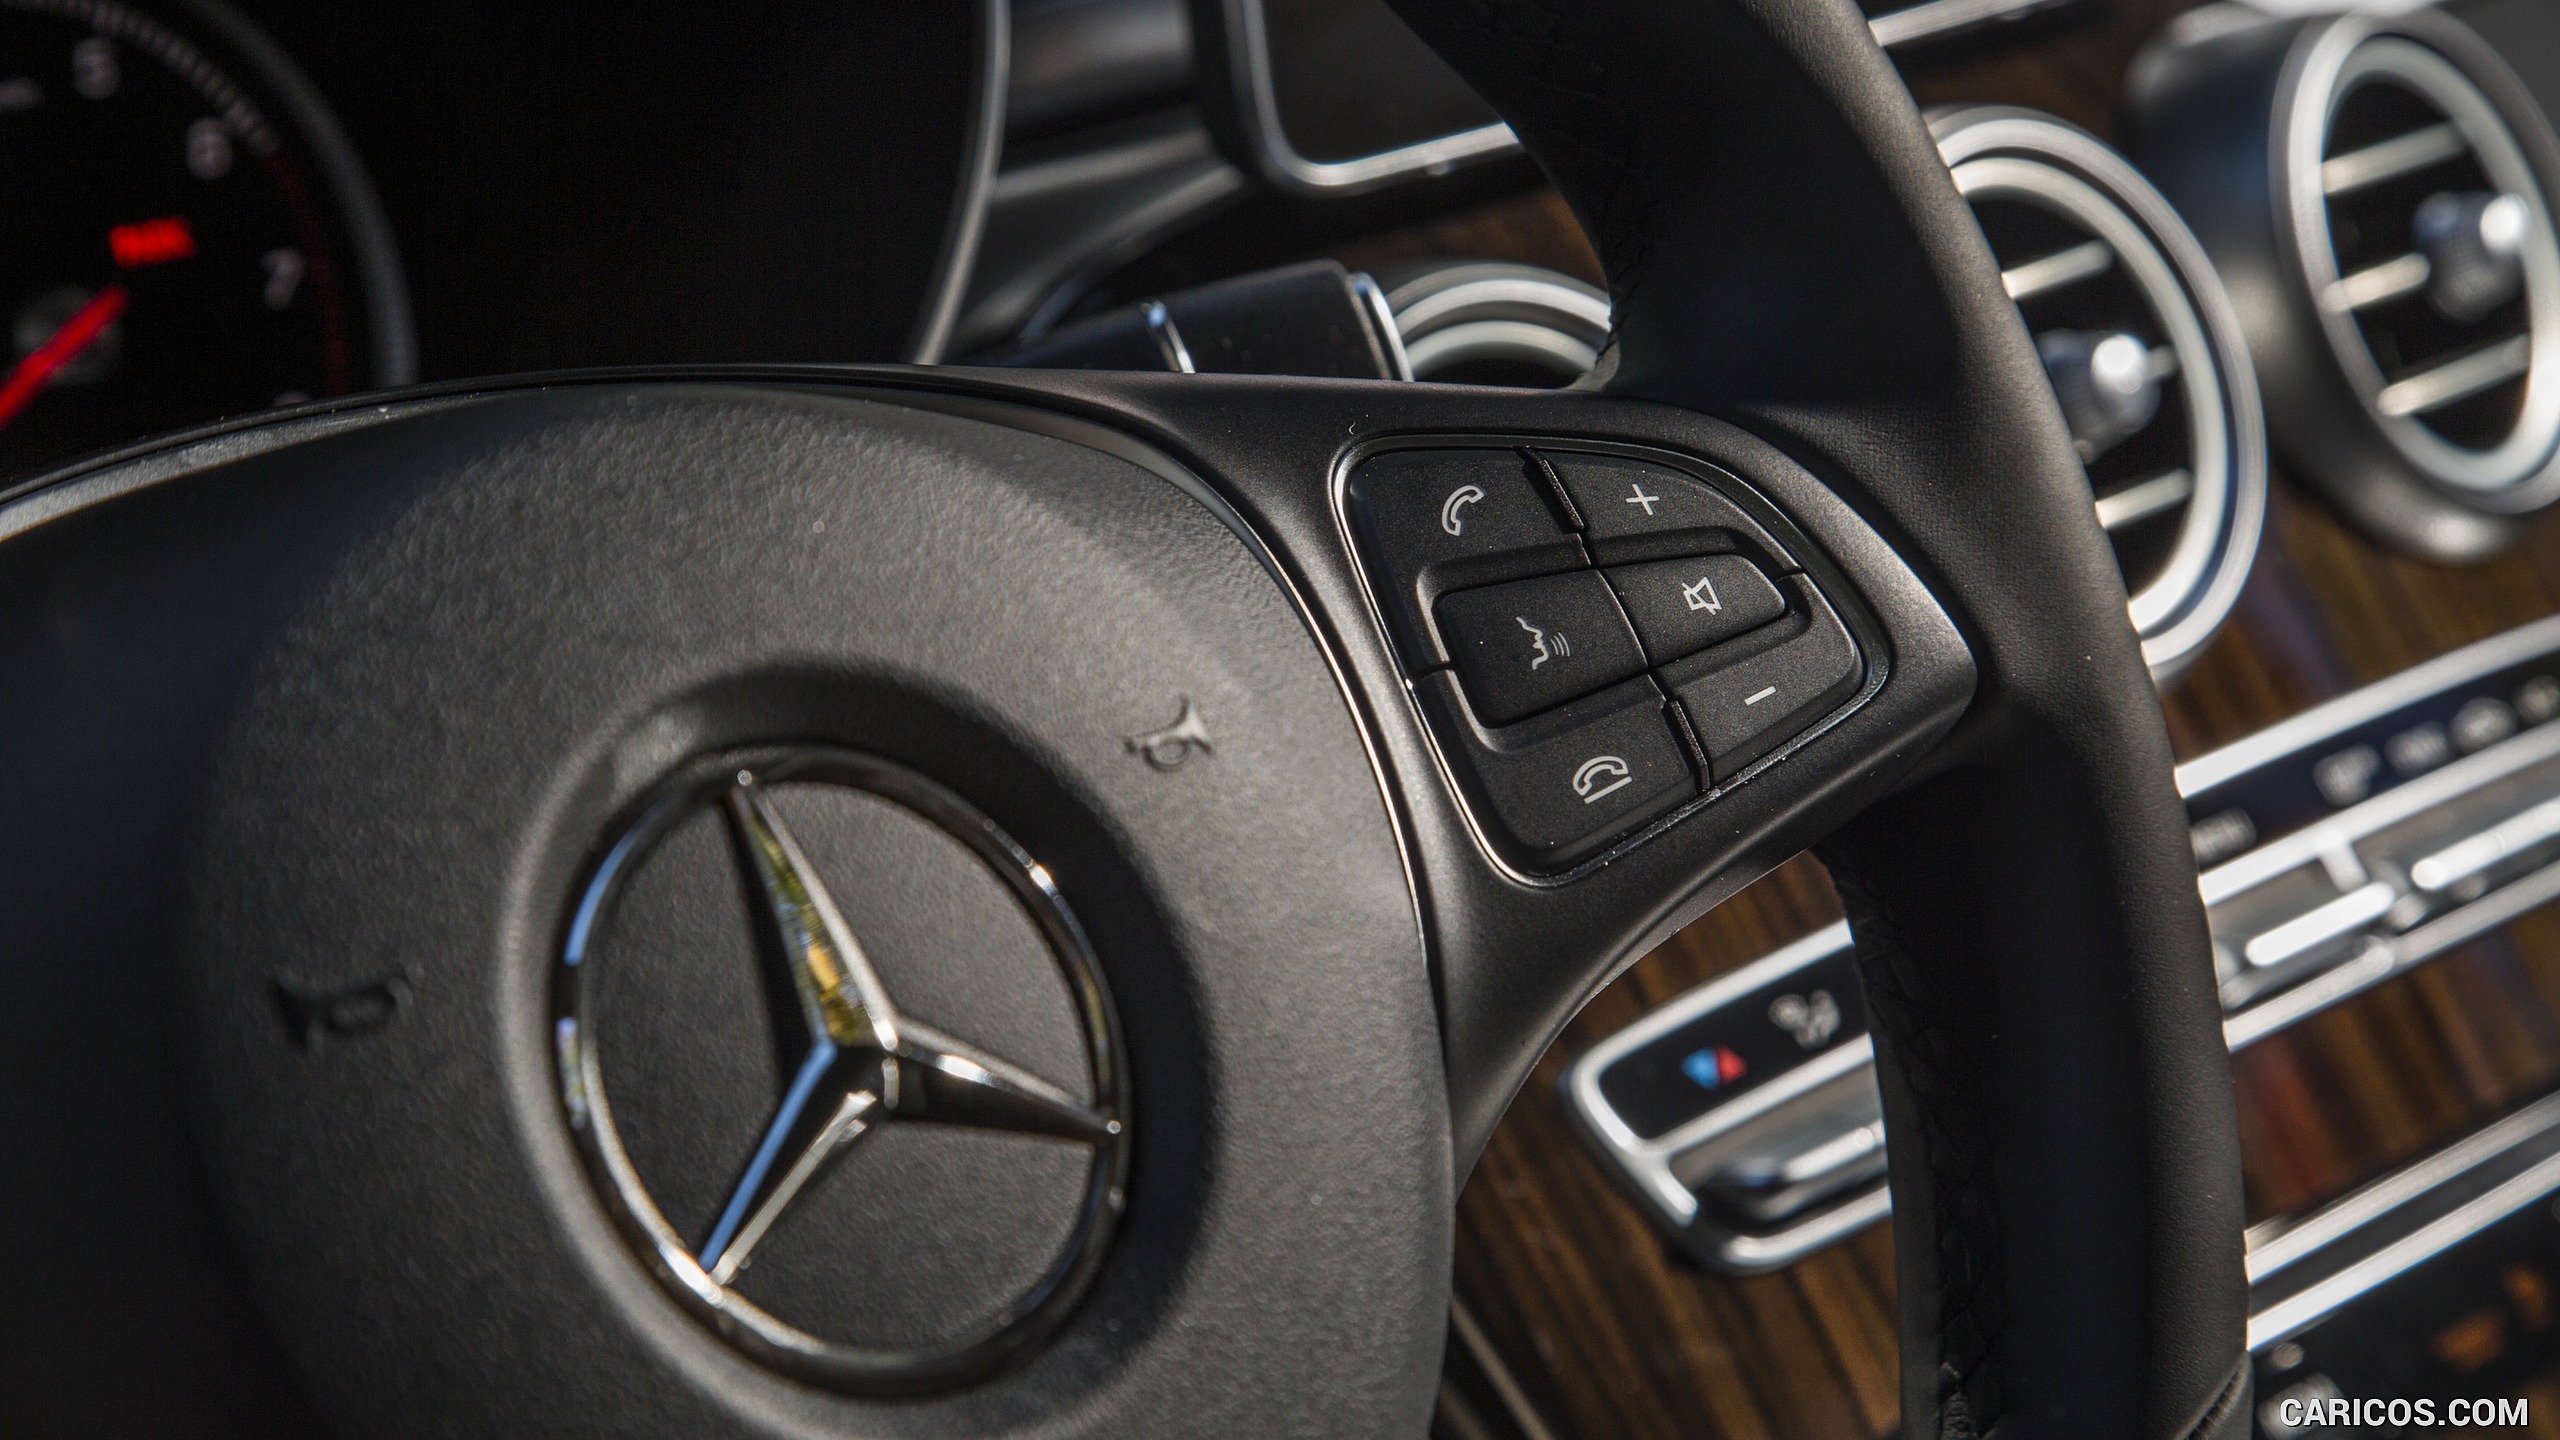 2016 Mercedes-Benz GLC GLC300 4MATIC (US-Spec) - Interior, Steering Wheel, #69 of 180